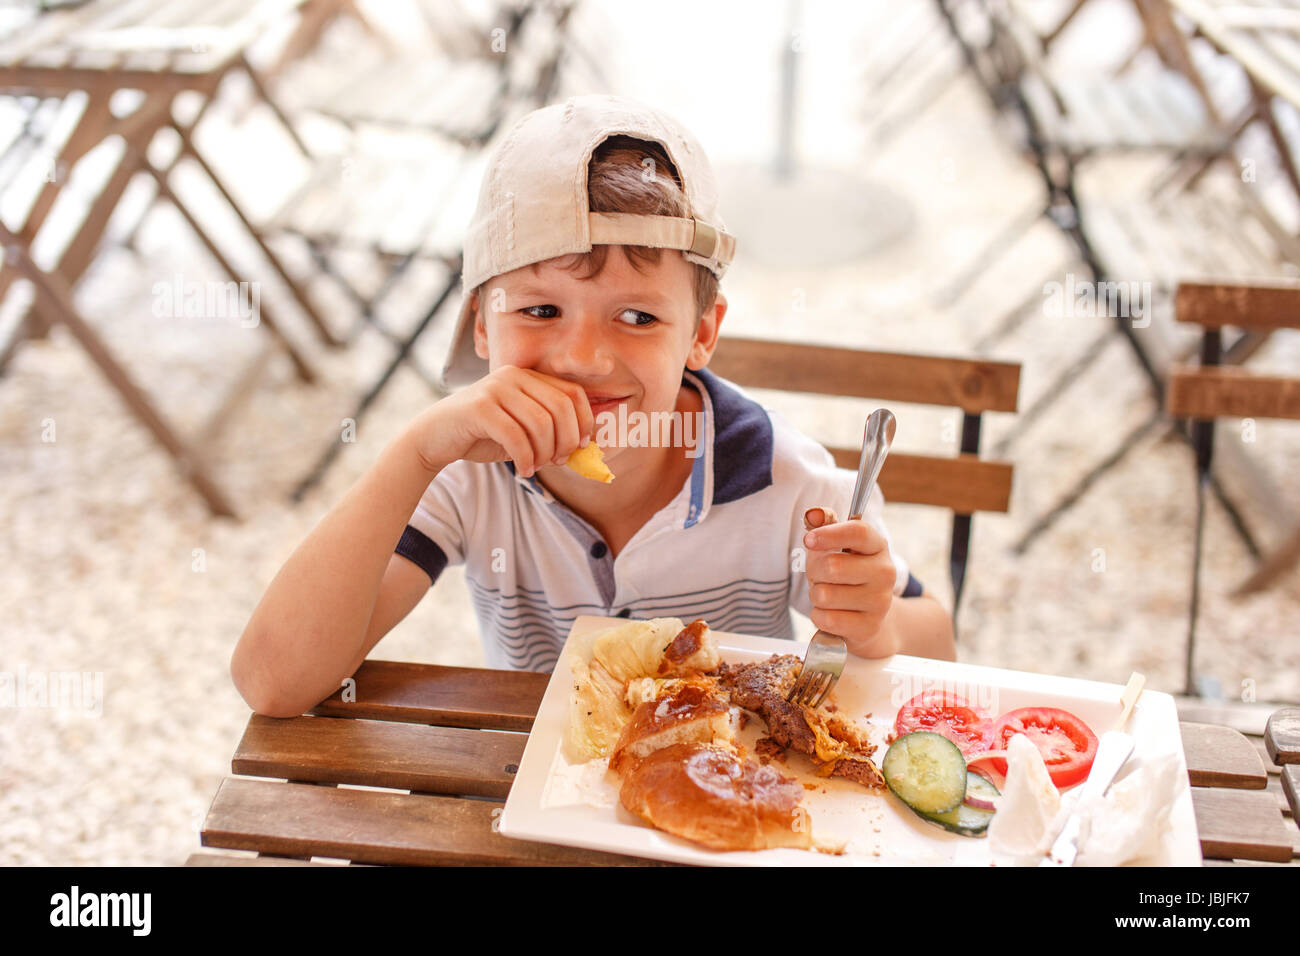 Little caucasian boy in cap eating street food in restaurant Stock Photo